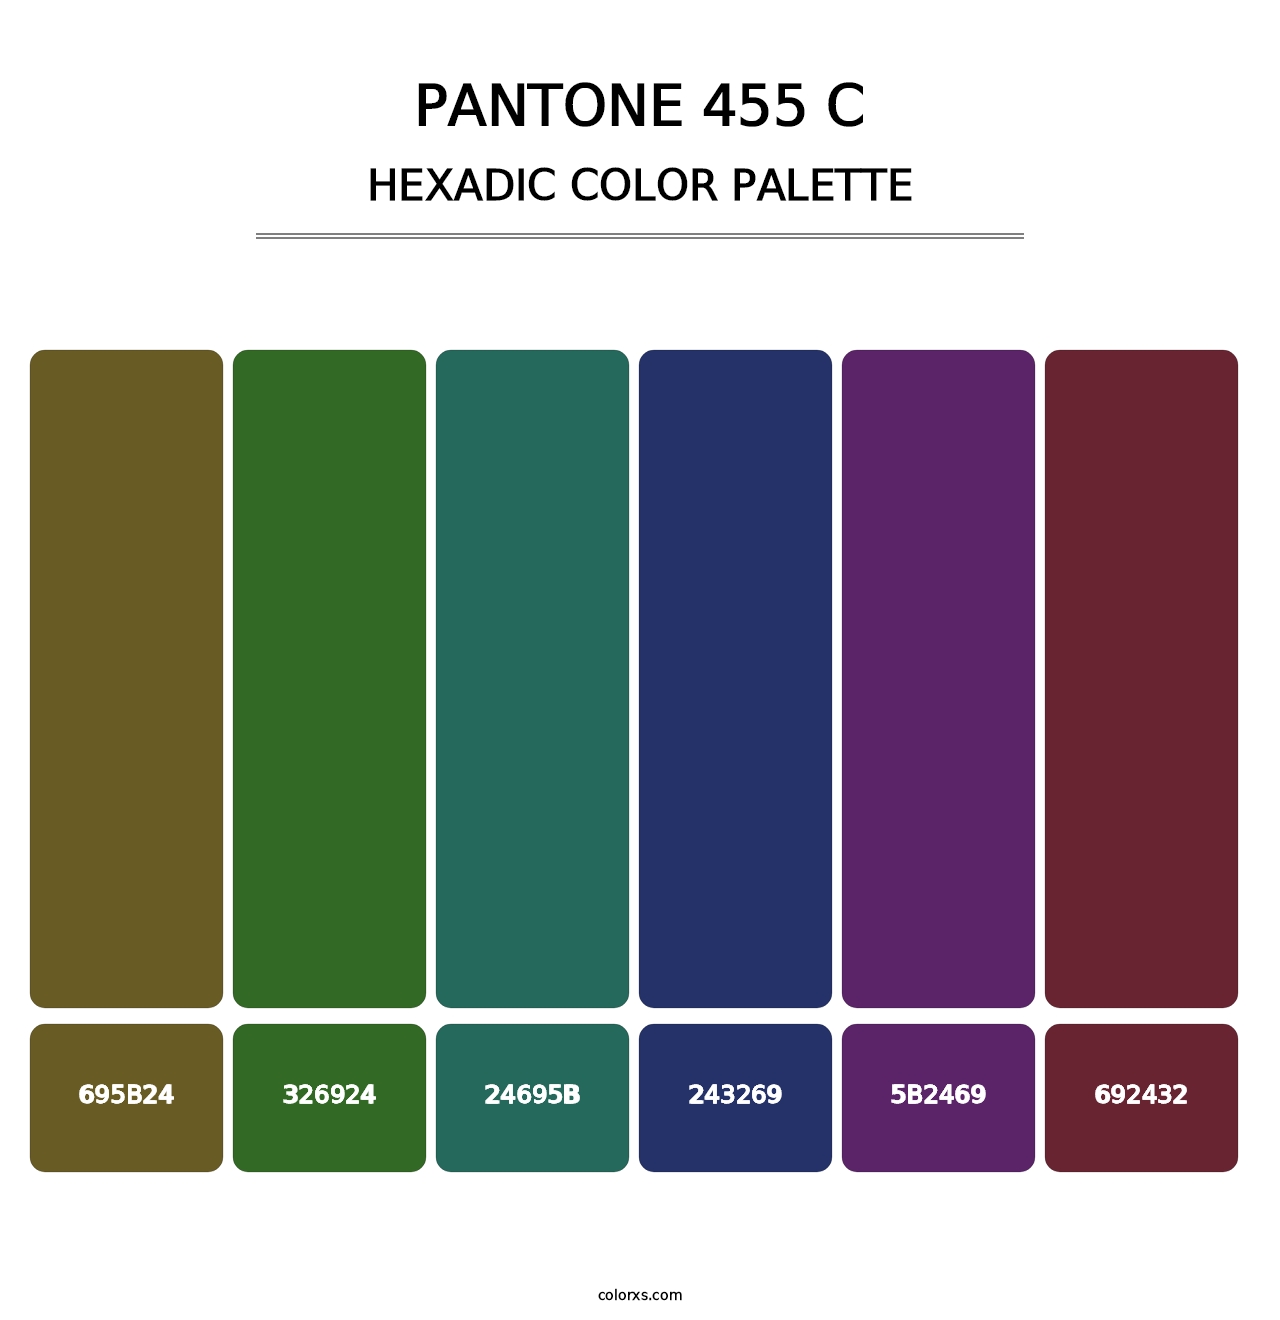 PANTONE 455 C - Hexadic Color Palette